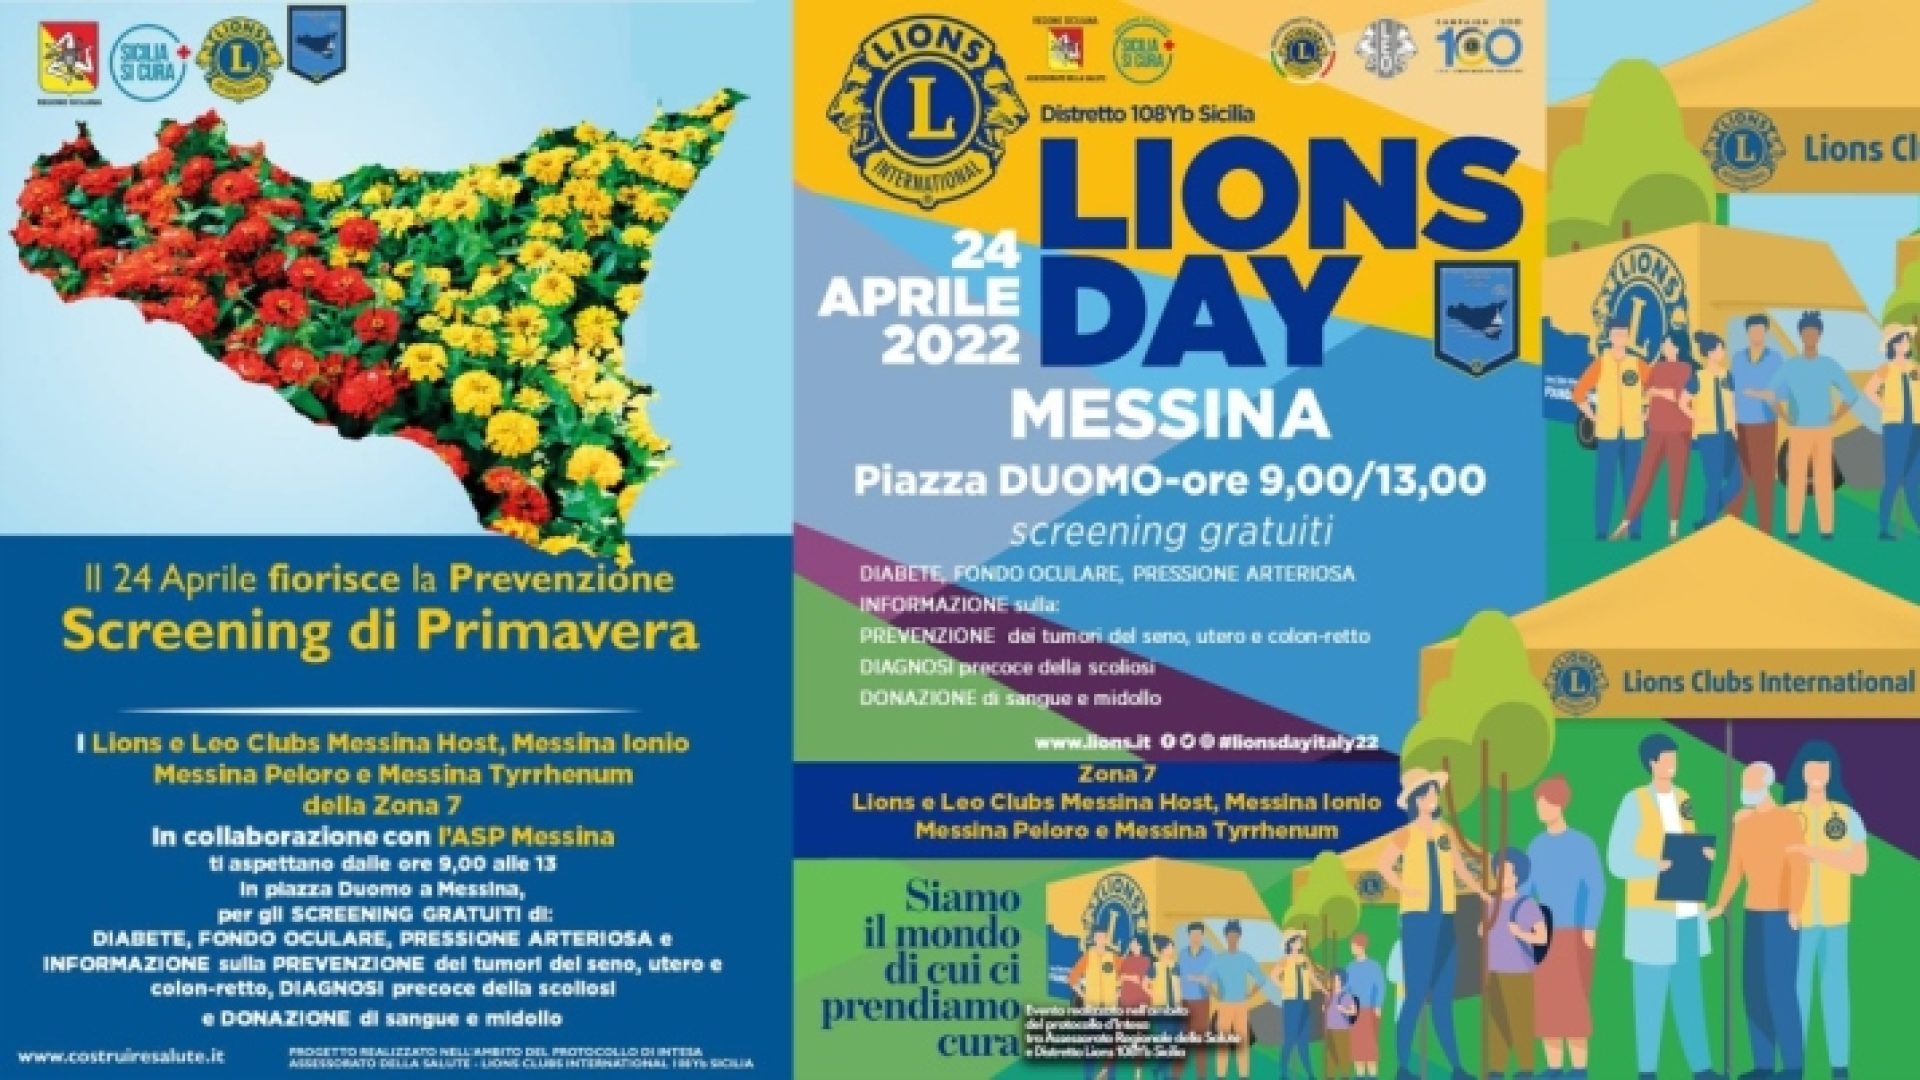 LionsDay_MessinaWebTV_Società